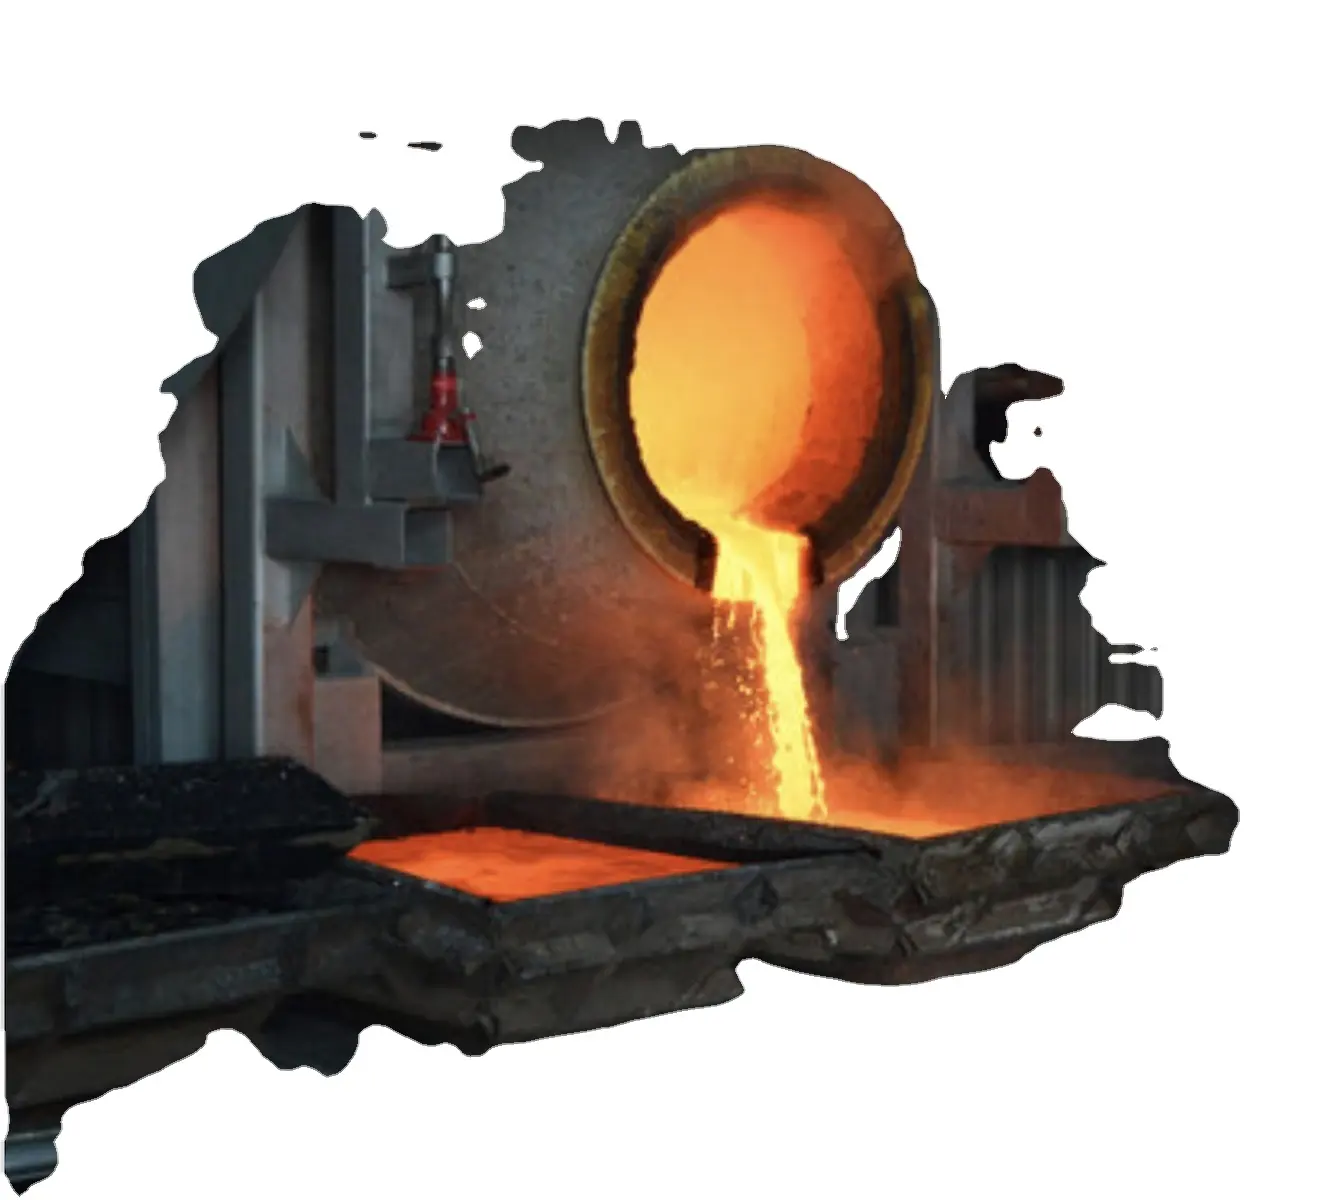 Gießerei Standard 10 Tonnen Kapazität Hybrid Kippen Aluminiums chrott Rotations ofen Doppel brennstoff zu einem erschwing lichen Preis befeuert